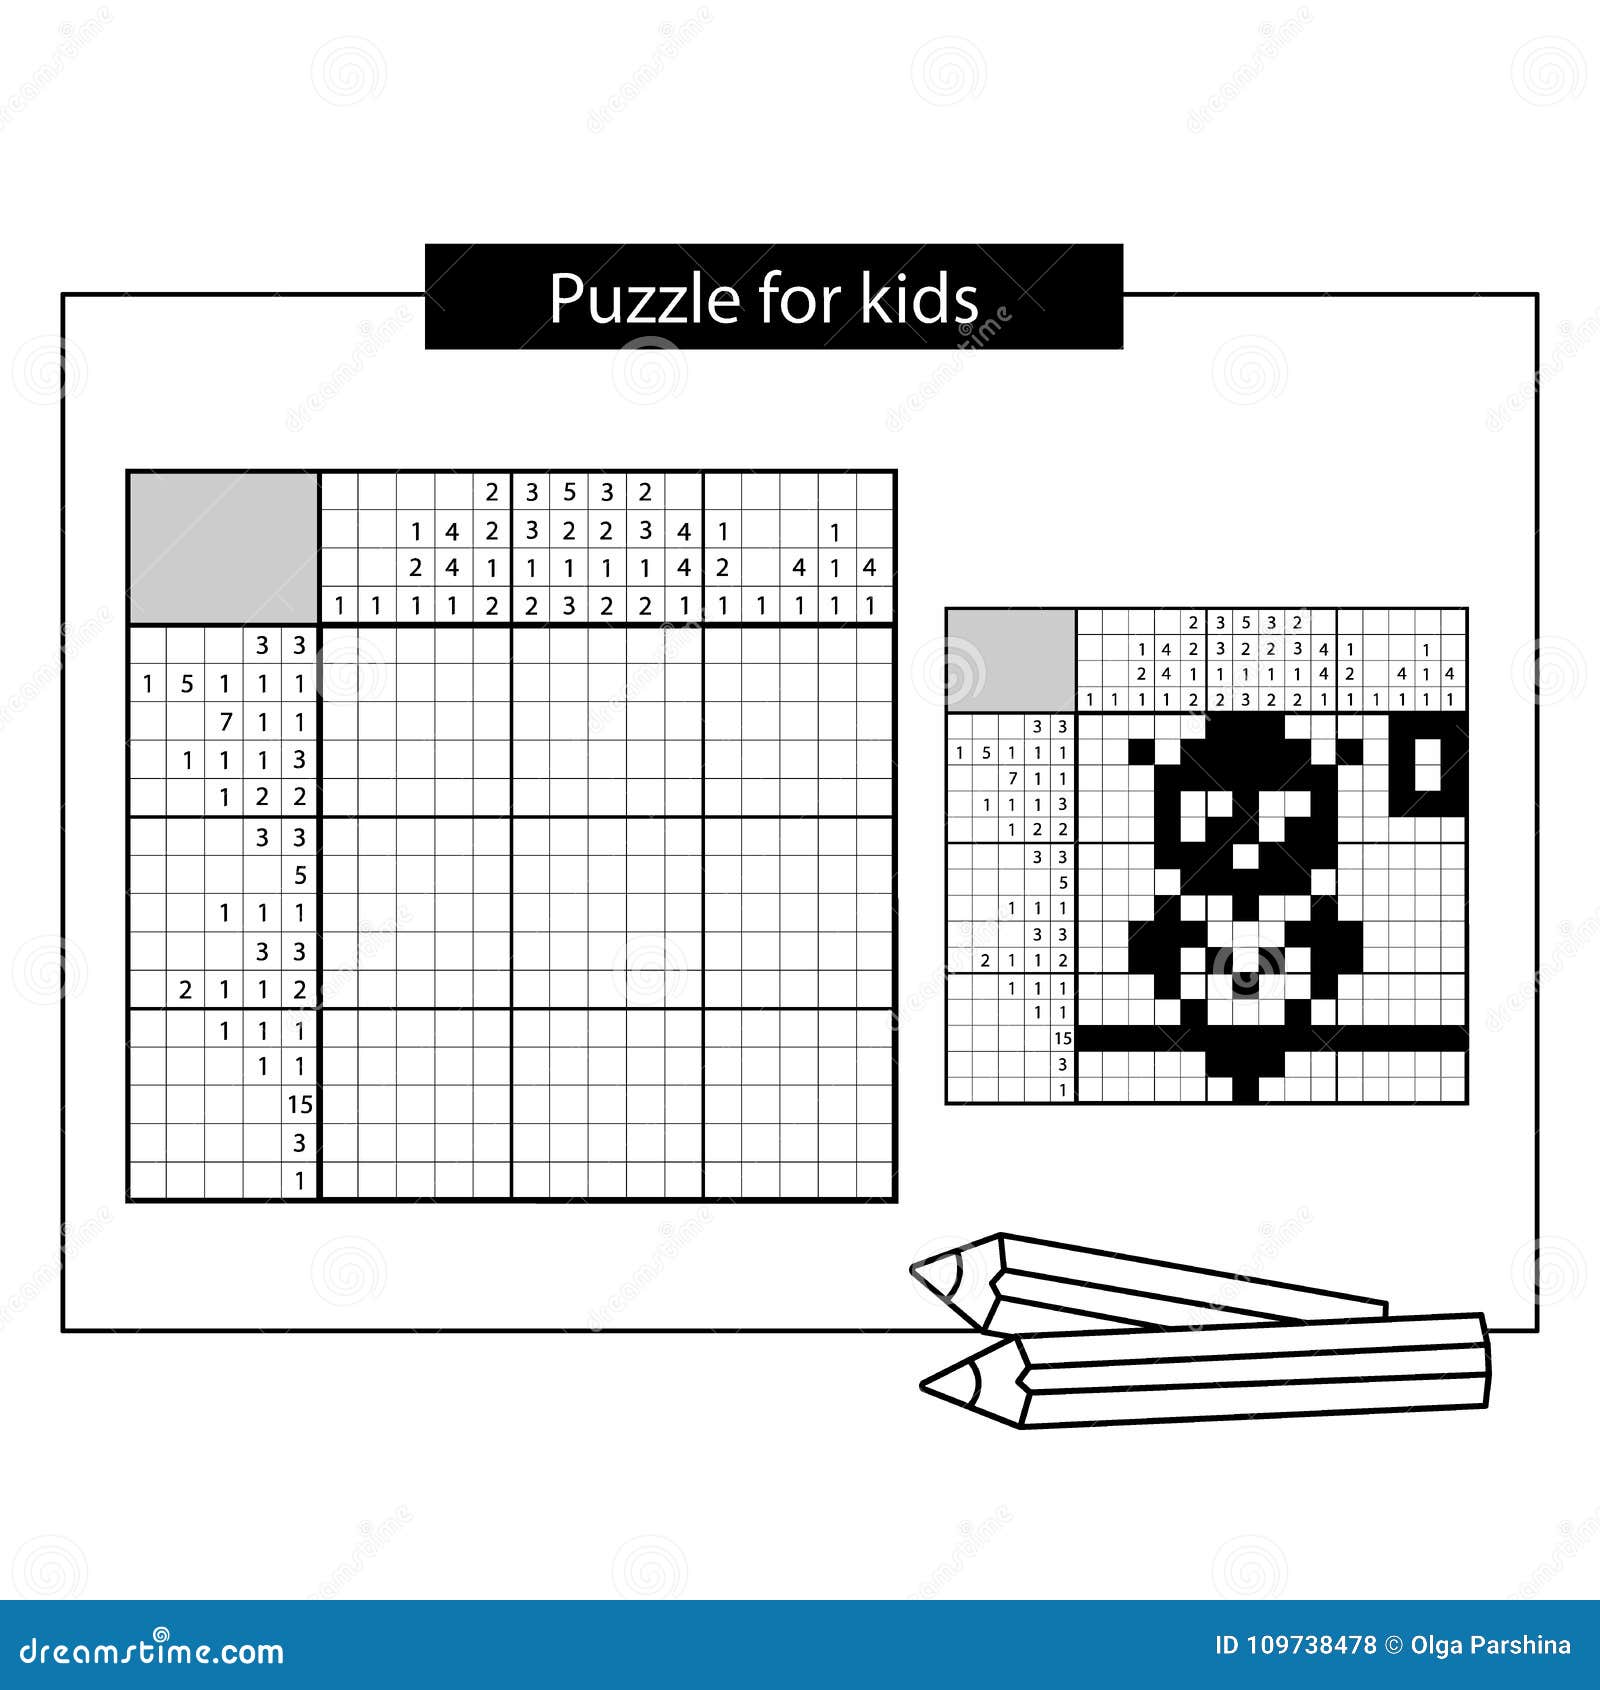 Puzzle de pintar por número (nonogram), jogo educacional para